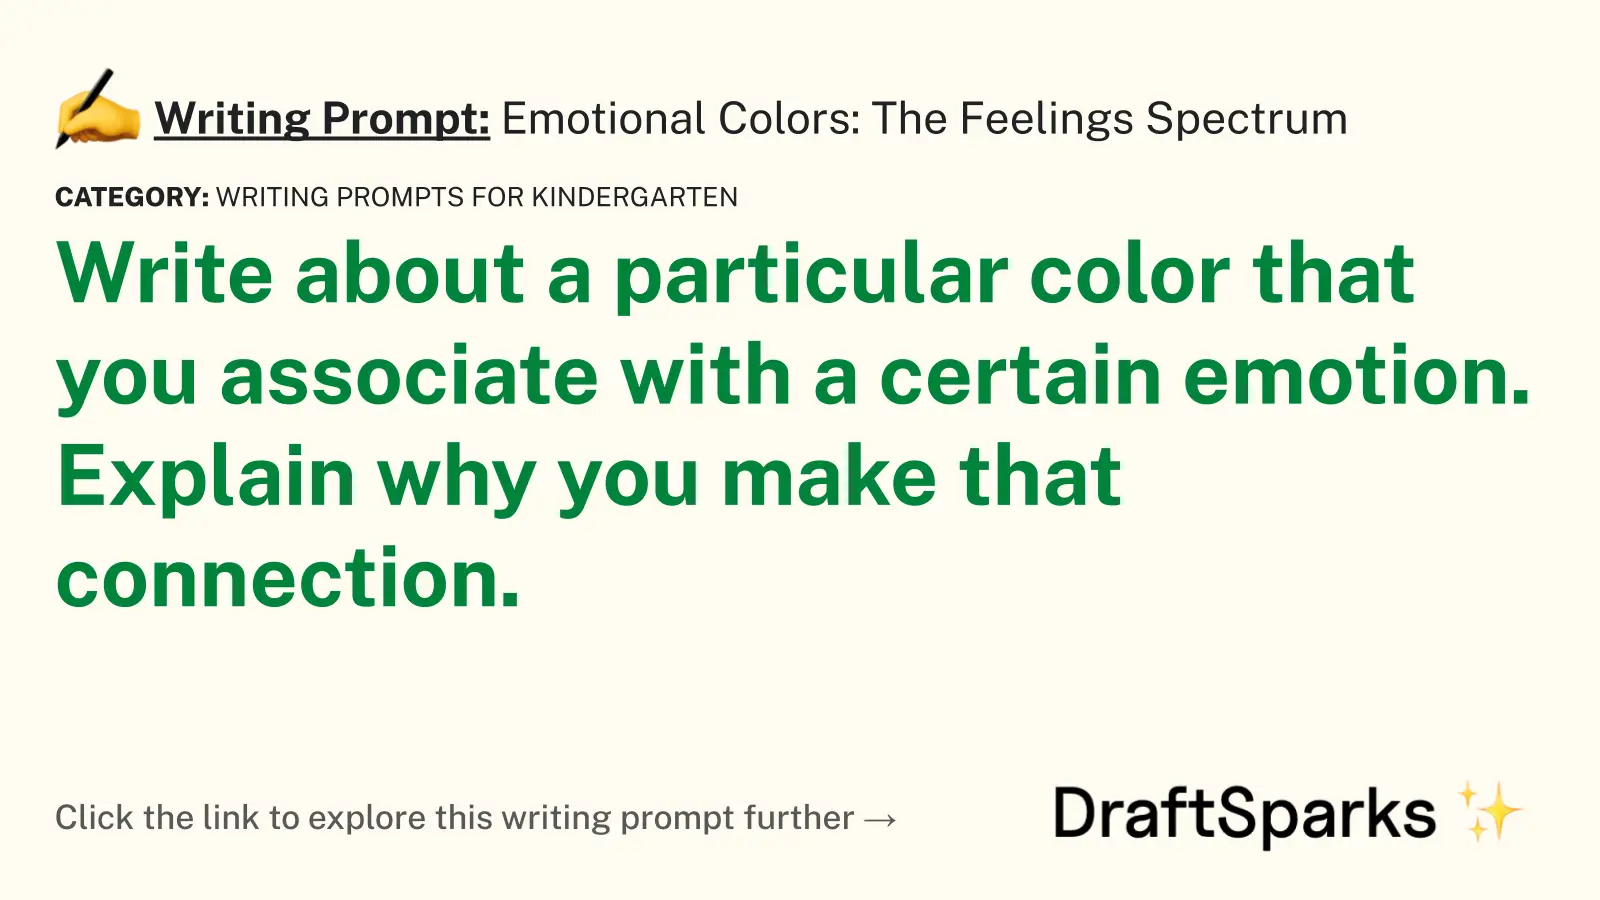 Emotional Colors: The Feelings Spectrum